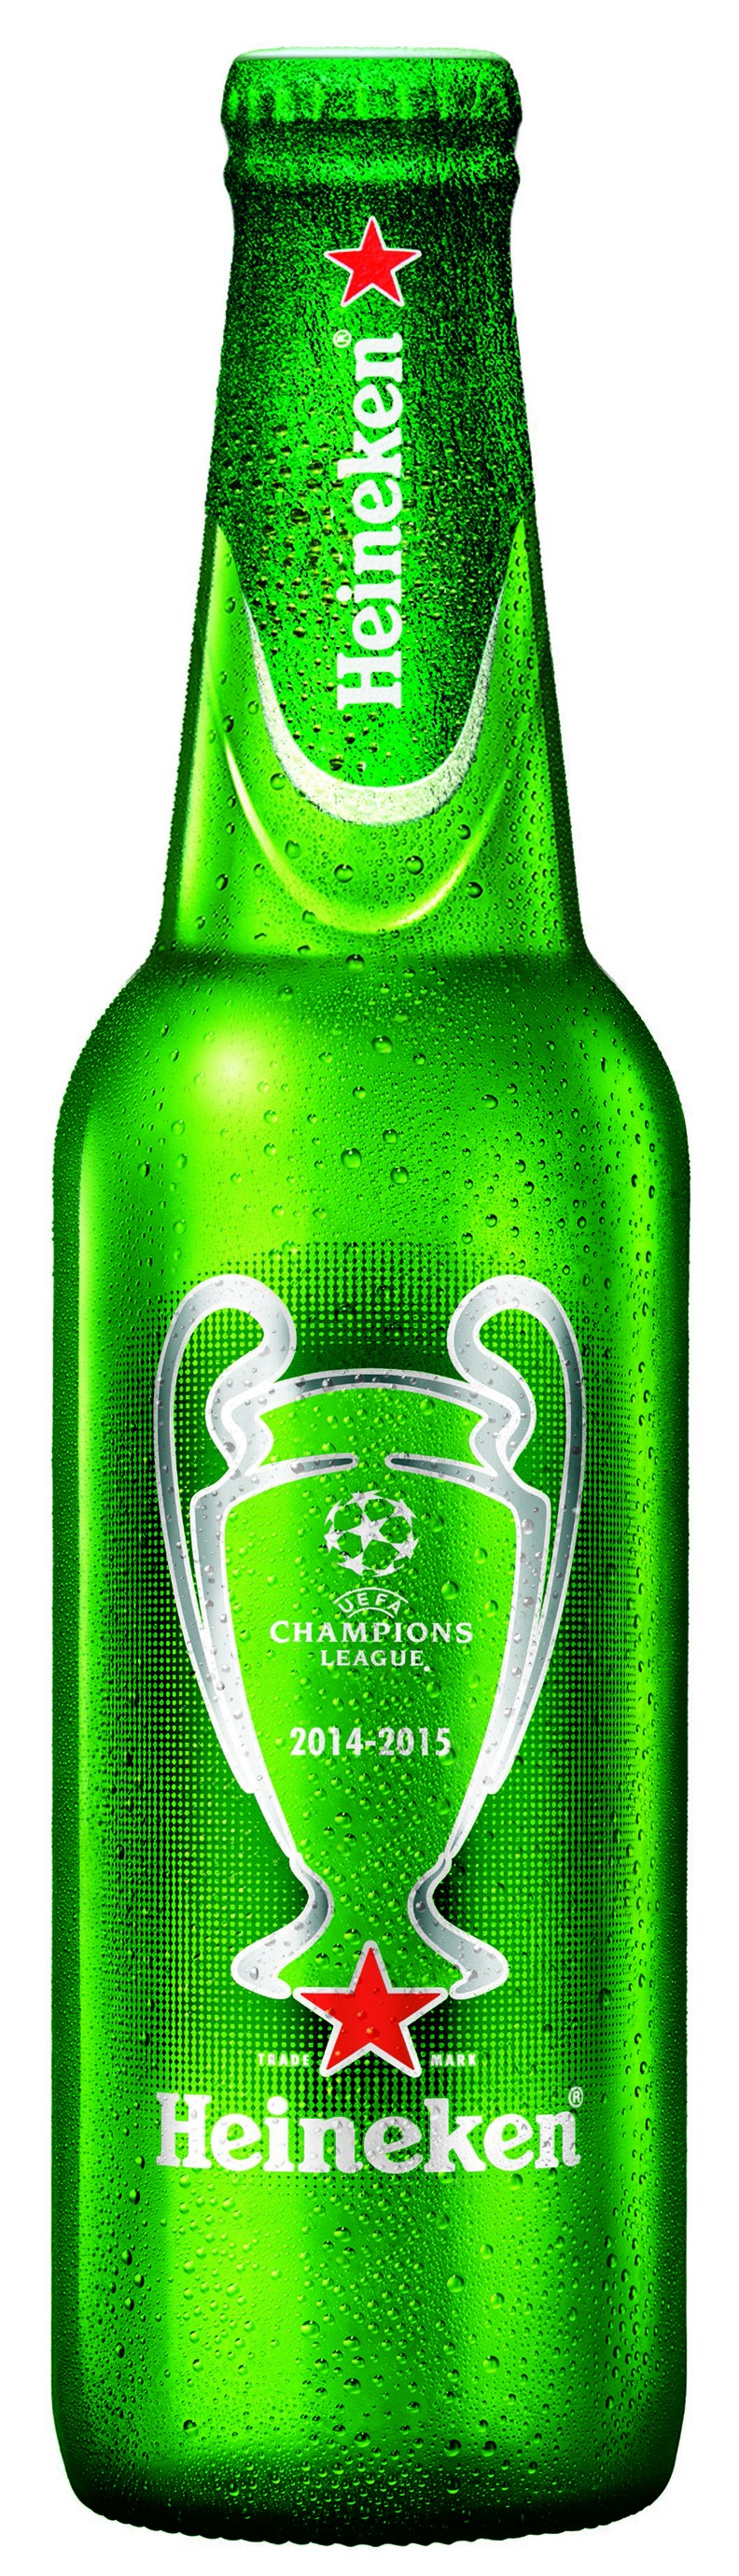 Thiet ke chai Heineken moi - UEFA Champions League